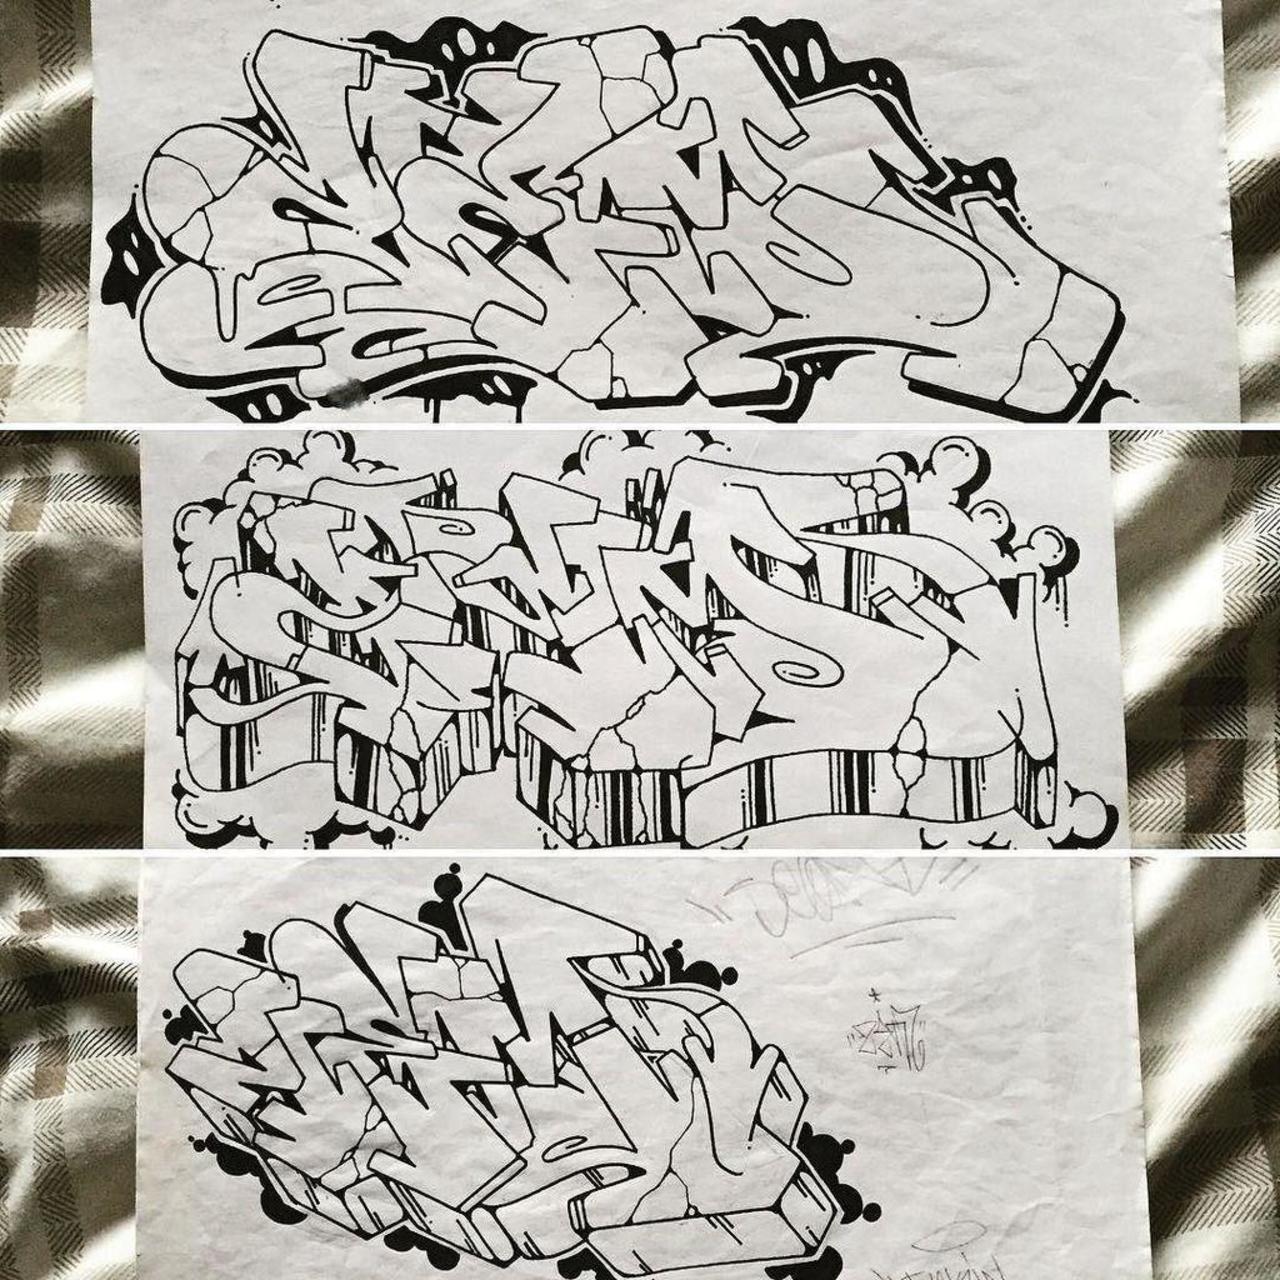 RT @artpushr: via #mr.k_kamikaze "http://bit.ly/1LTHHWn" #graffiti #streetart https://t.co/Y39DtJyzz1